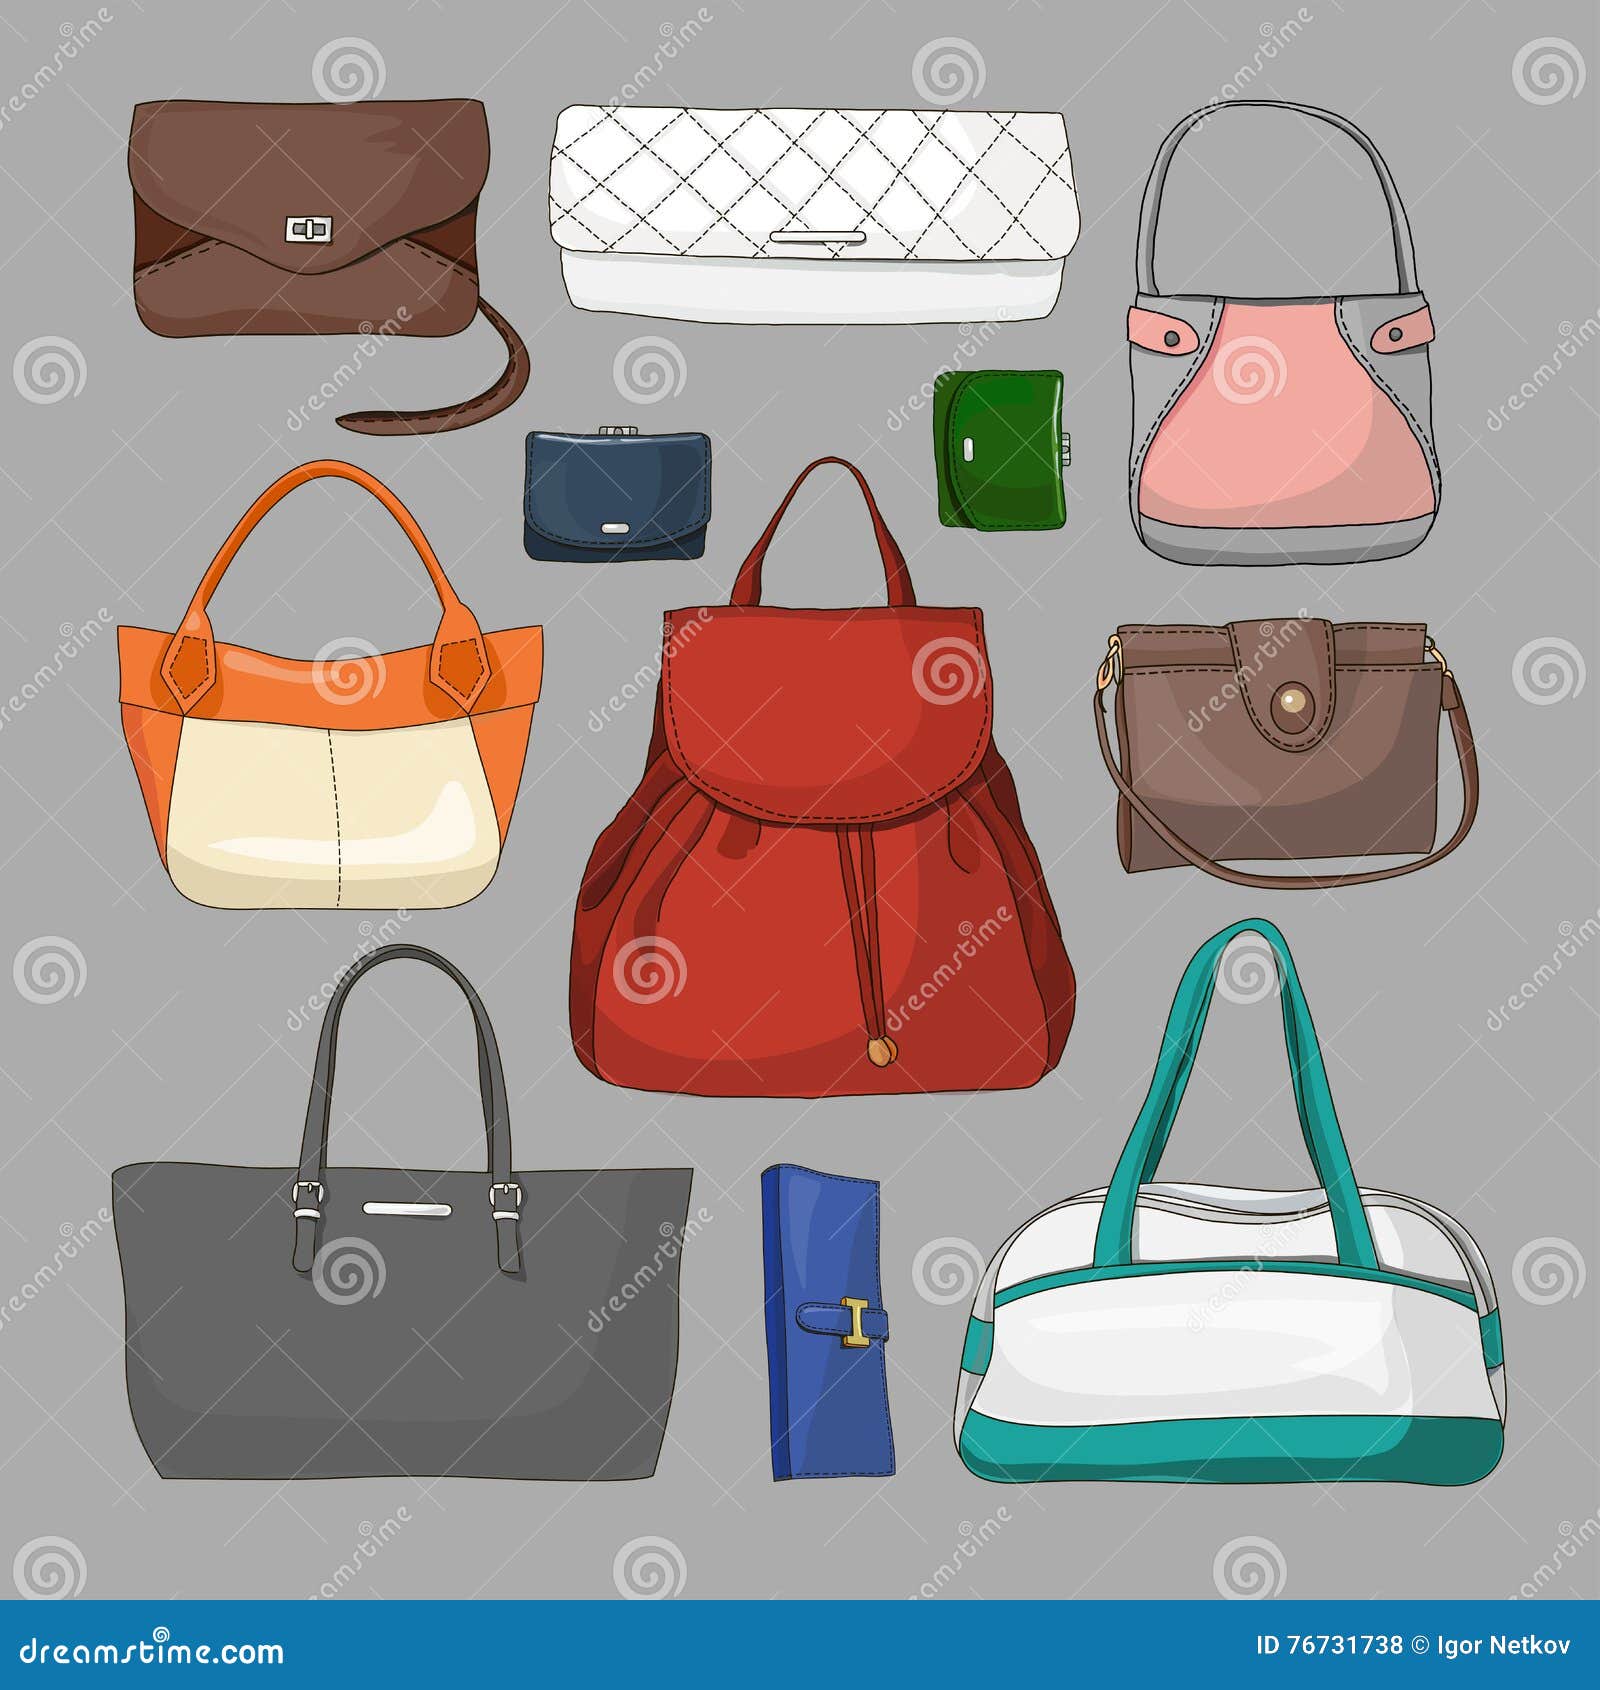 9 must-have women's handbags - Blog Sam Parfums